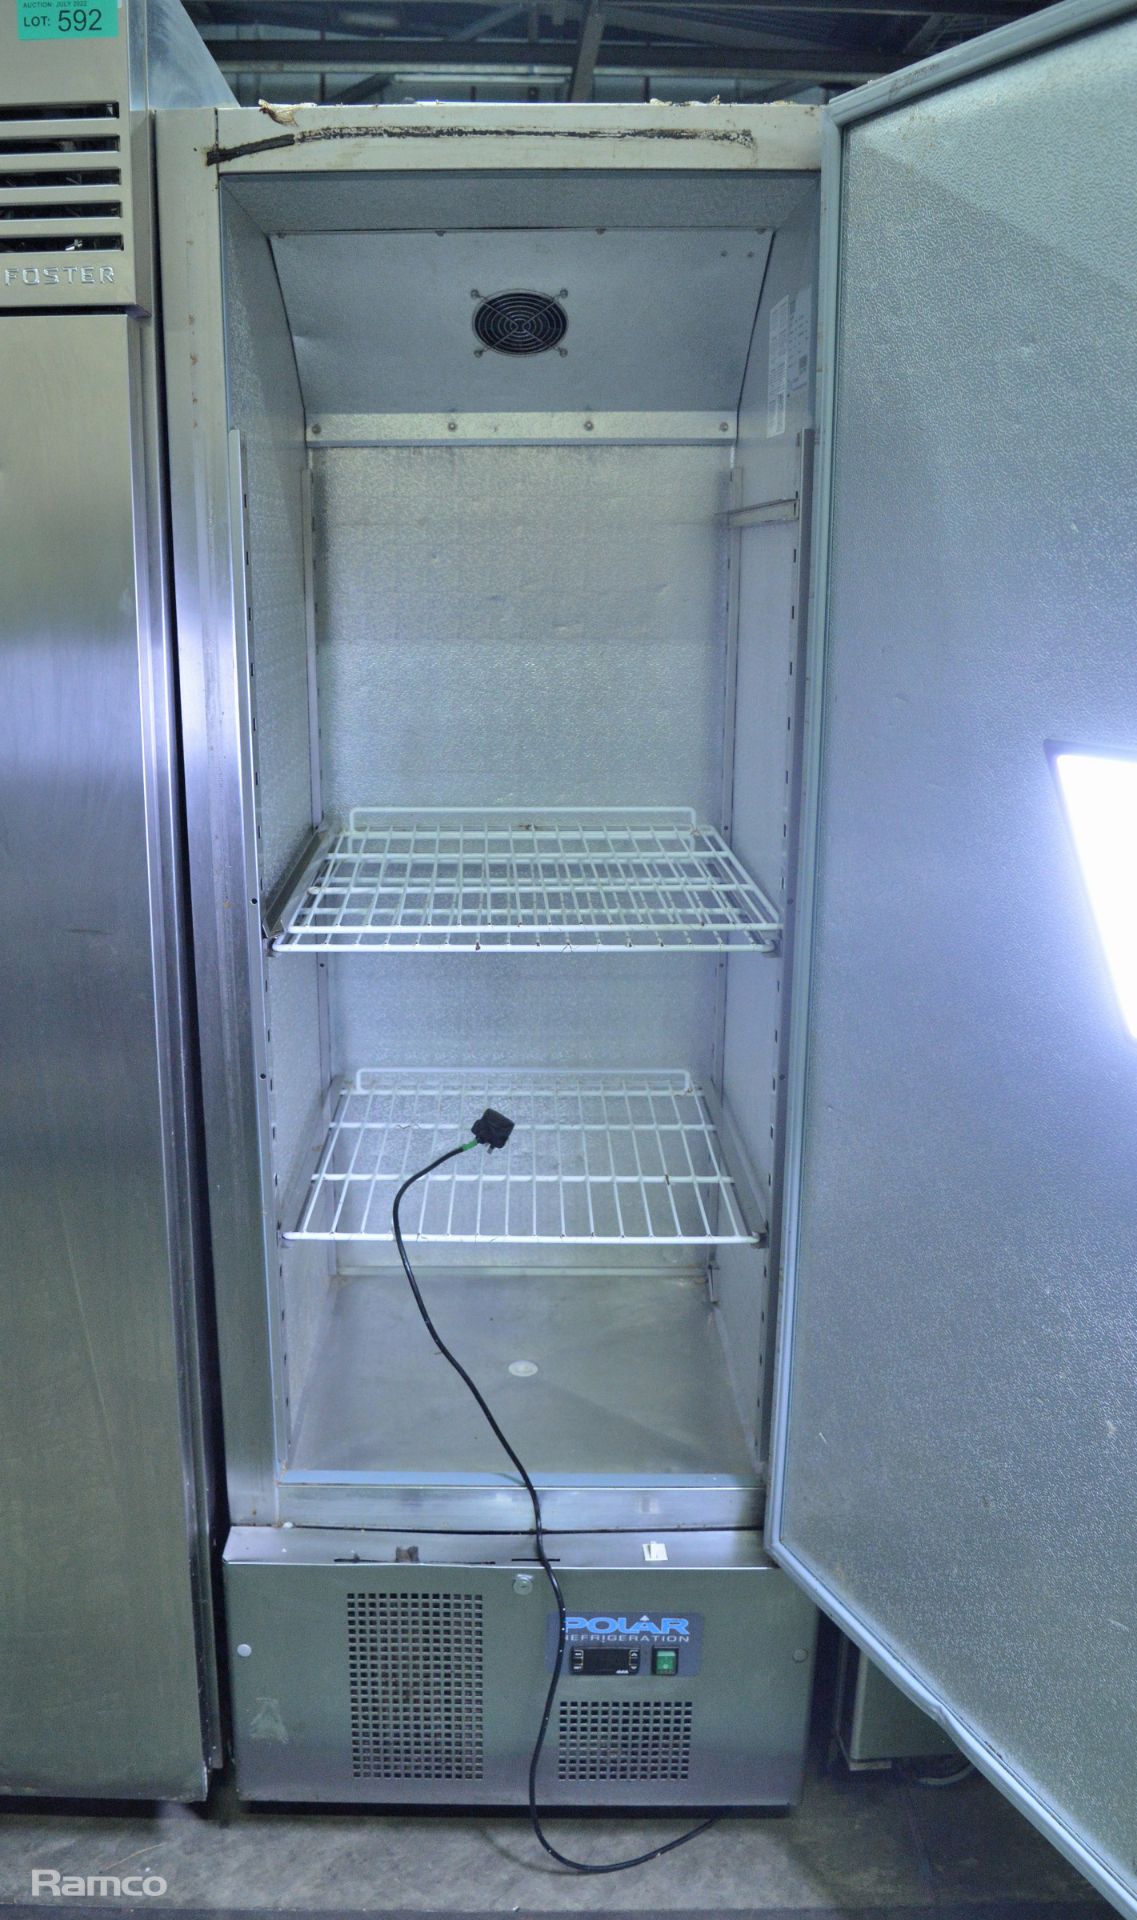 Polar G590-02 refrigerator - 230V - 50Hz - L68 x W70 x H194cm - Image 2 of 6